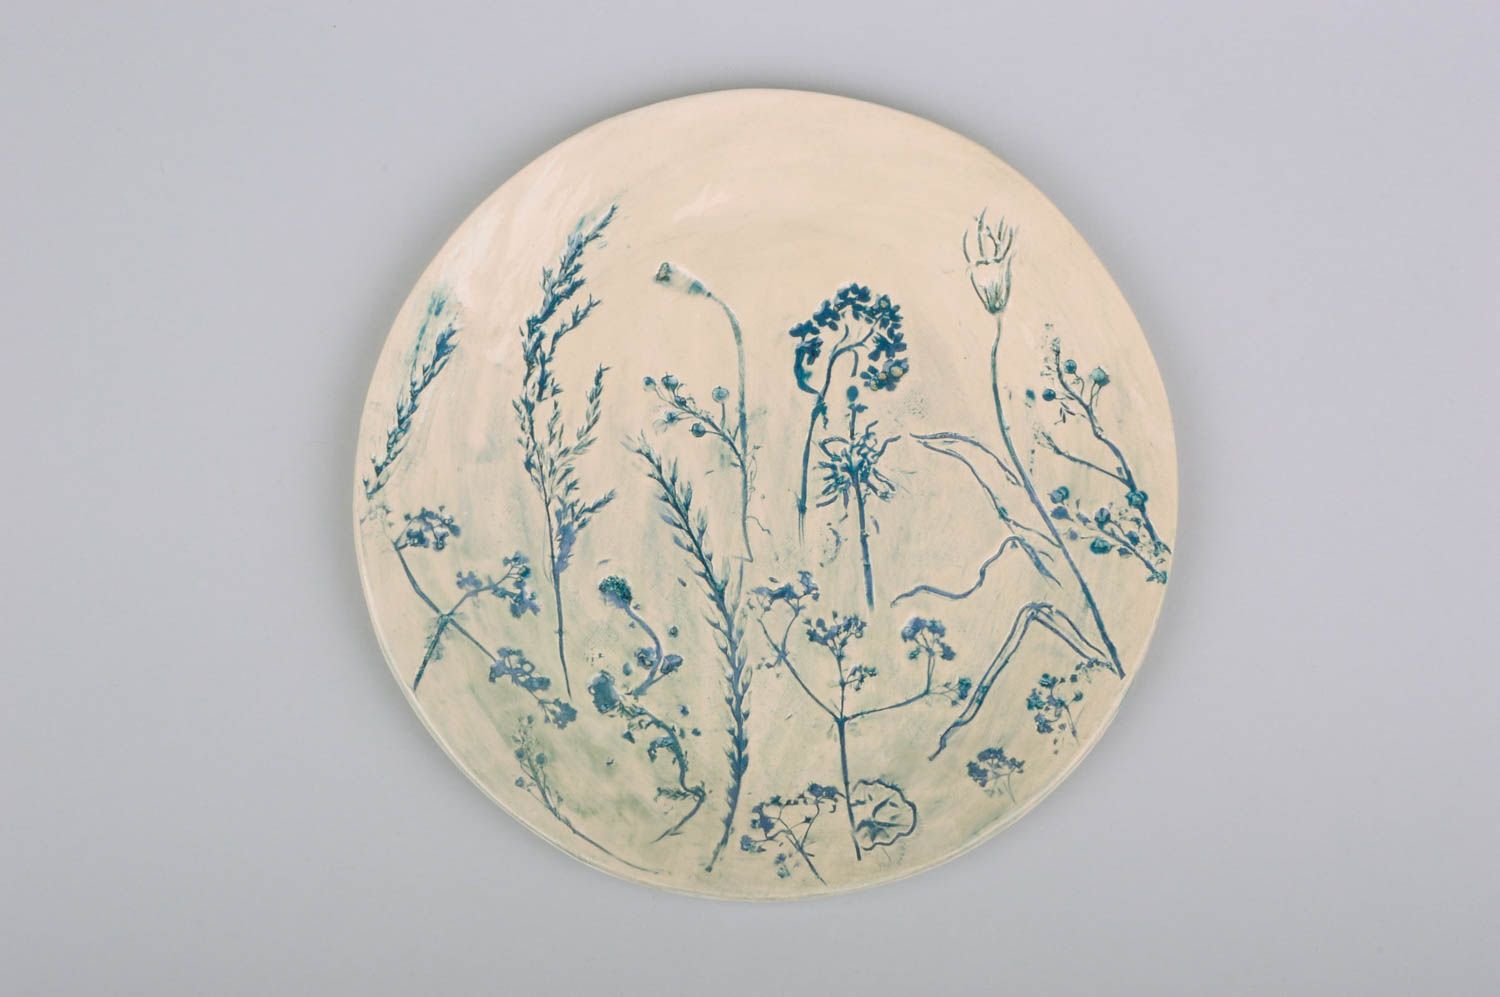 Beautiful round handmade ceramic plate clay plate decorative dishware gift ideas photo 1